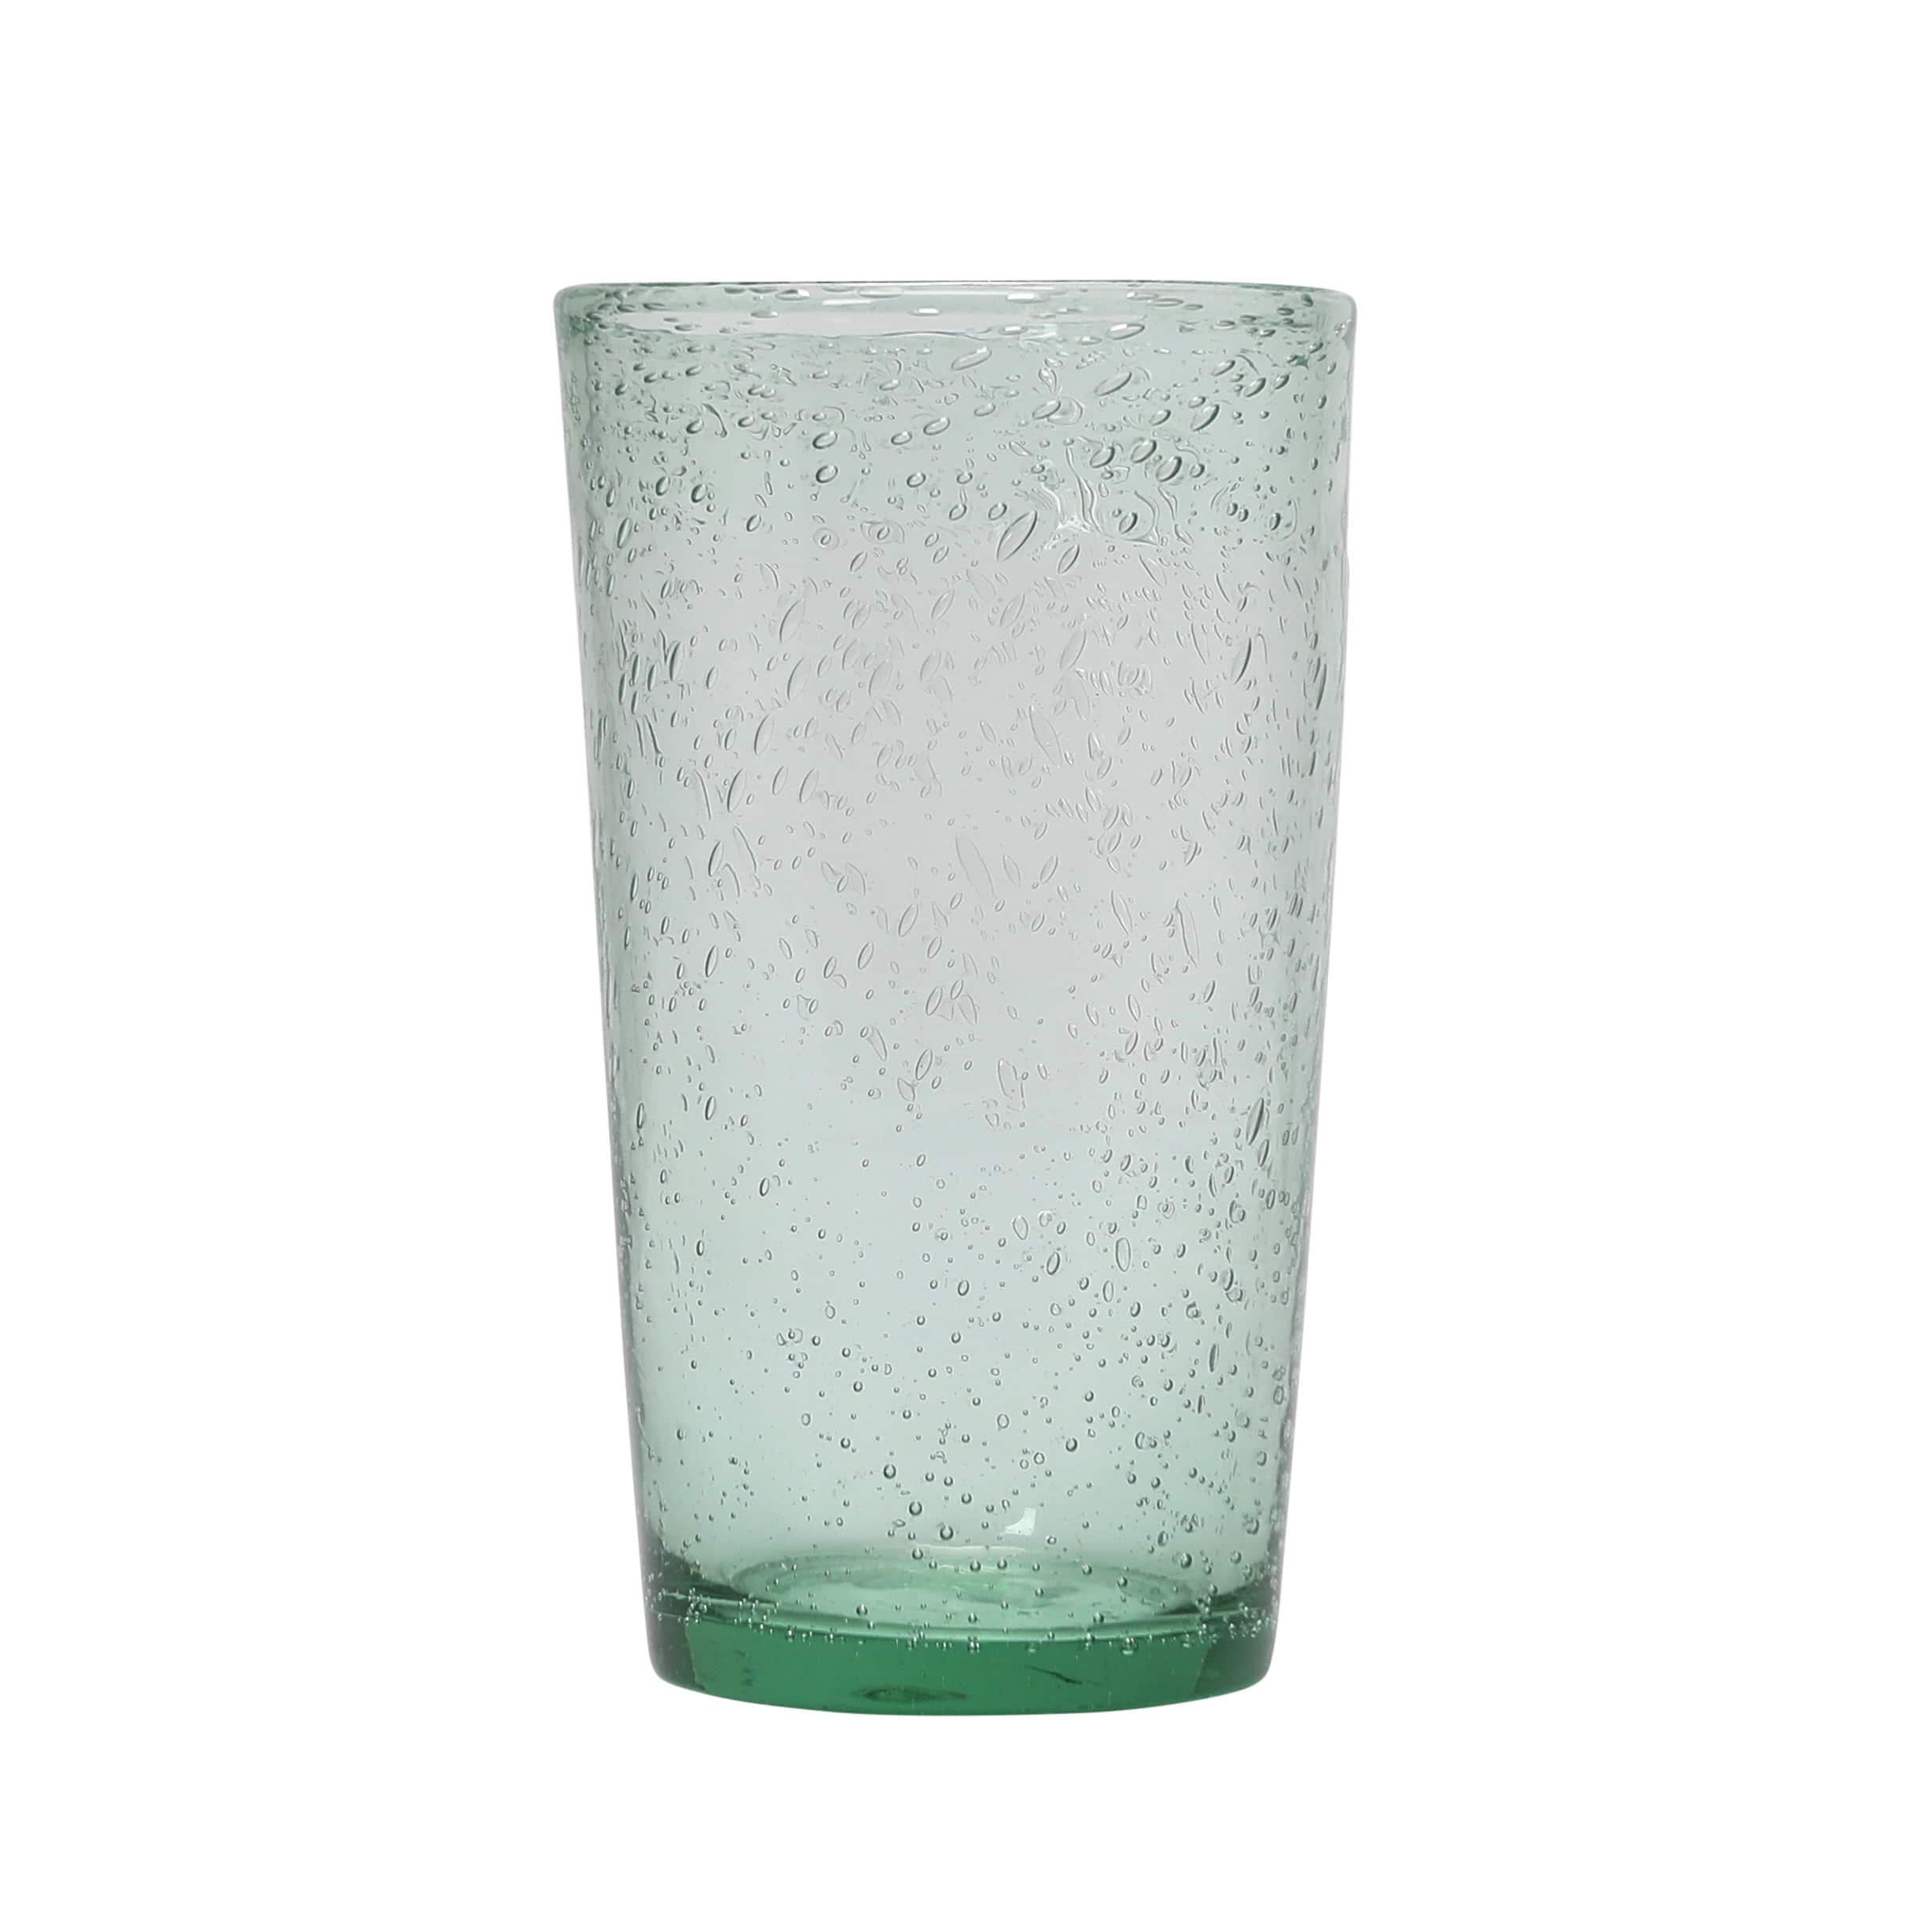 20oz. Transparent Bubble Drinking Glass Set